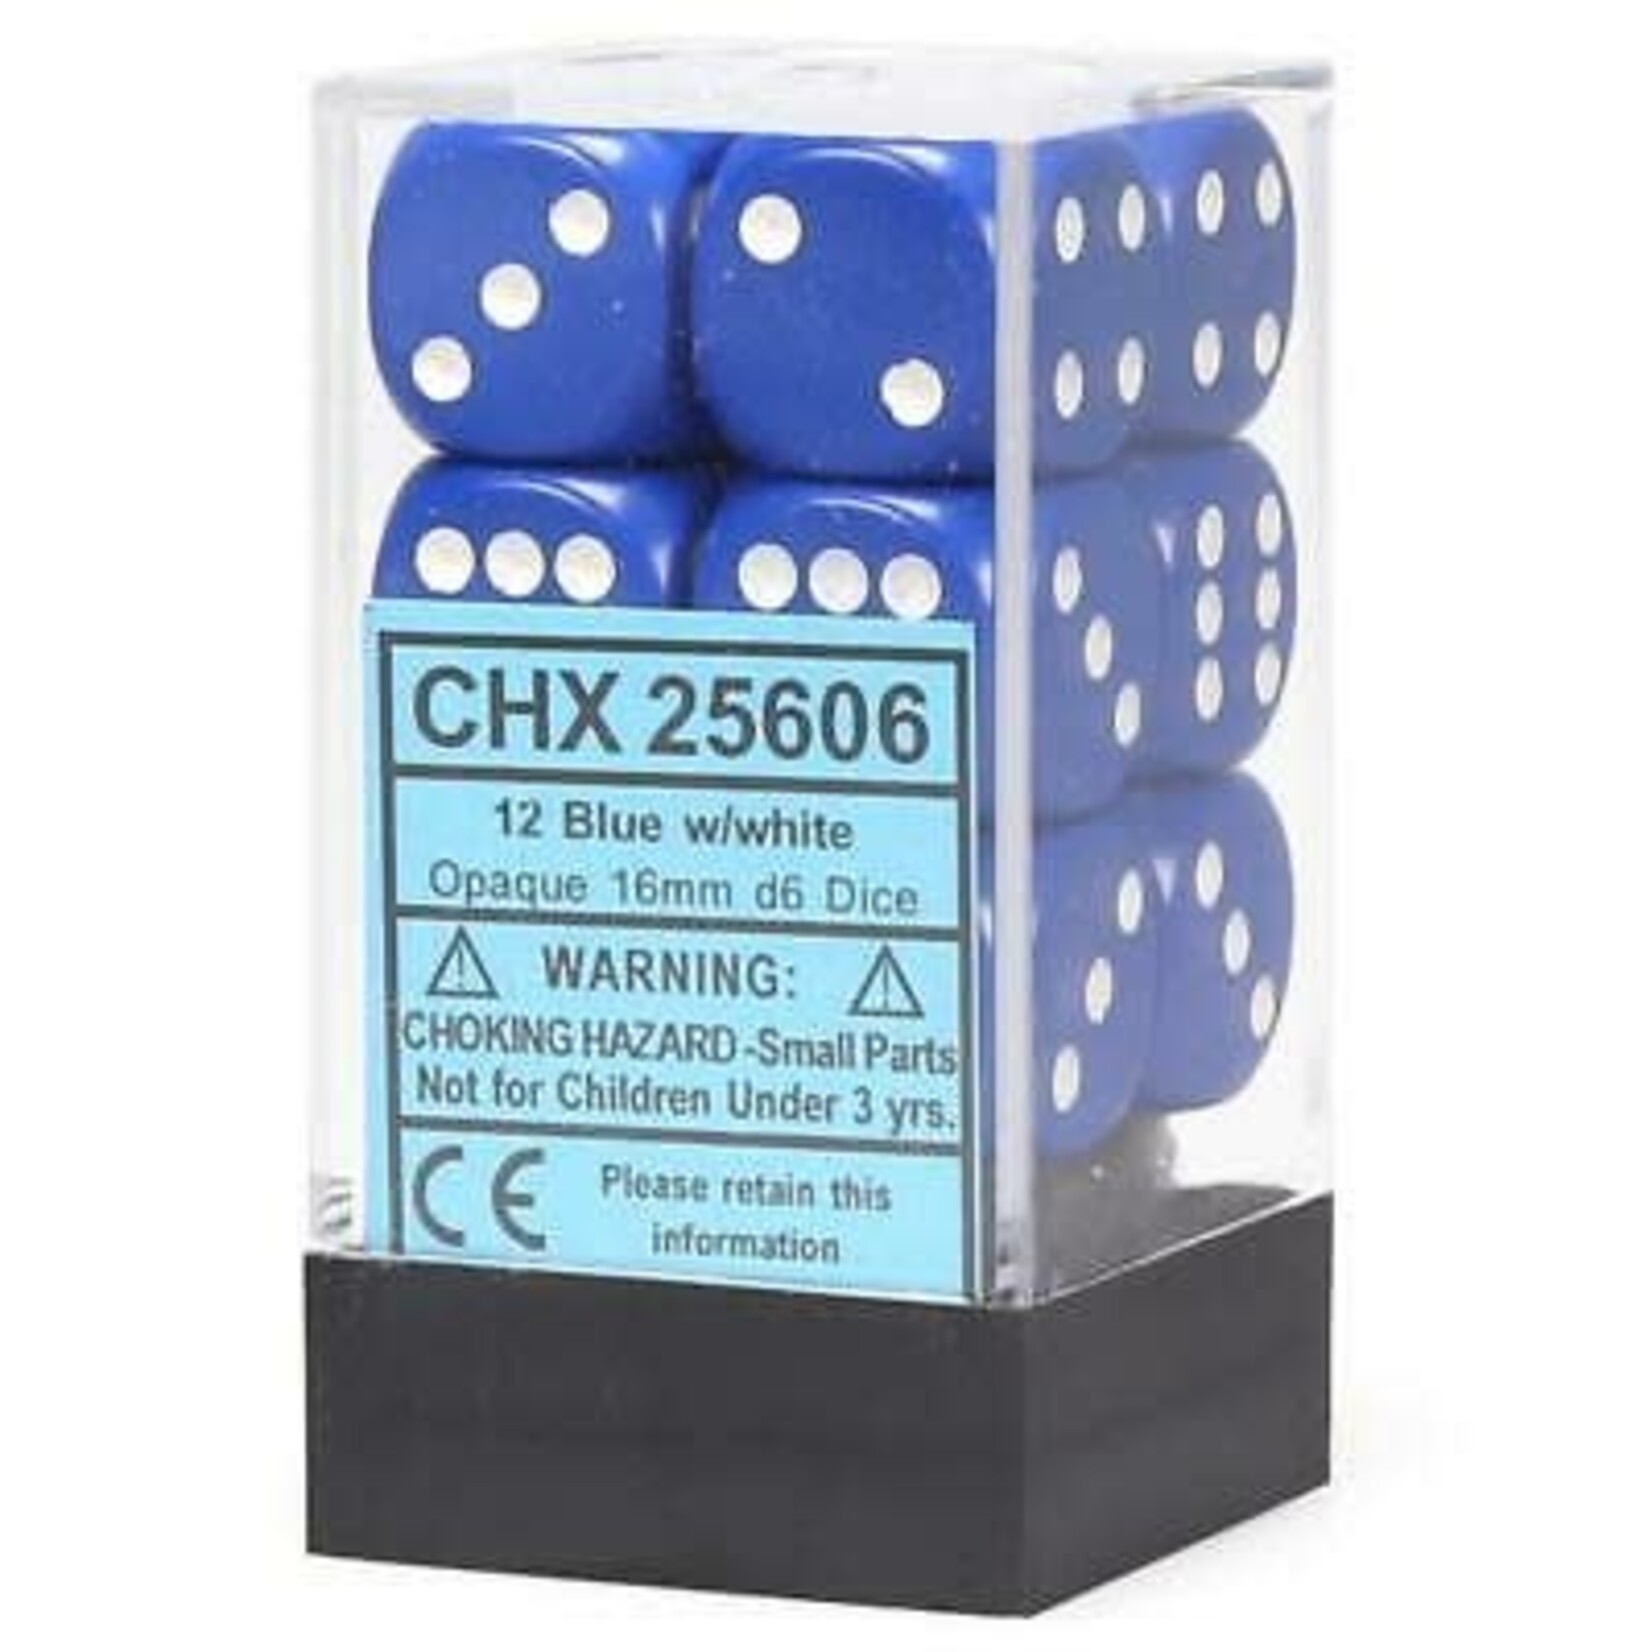 Chessex Opaque Blue/white 16mm d6 Dice Block (12 dice)